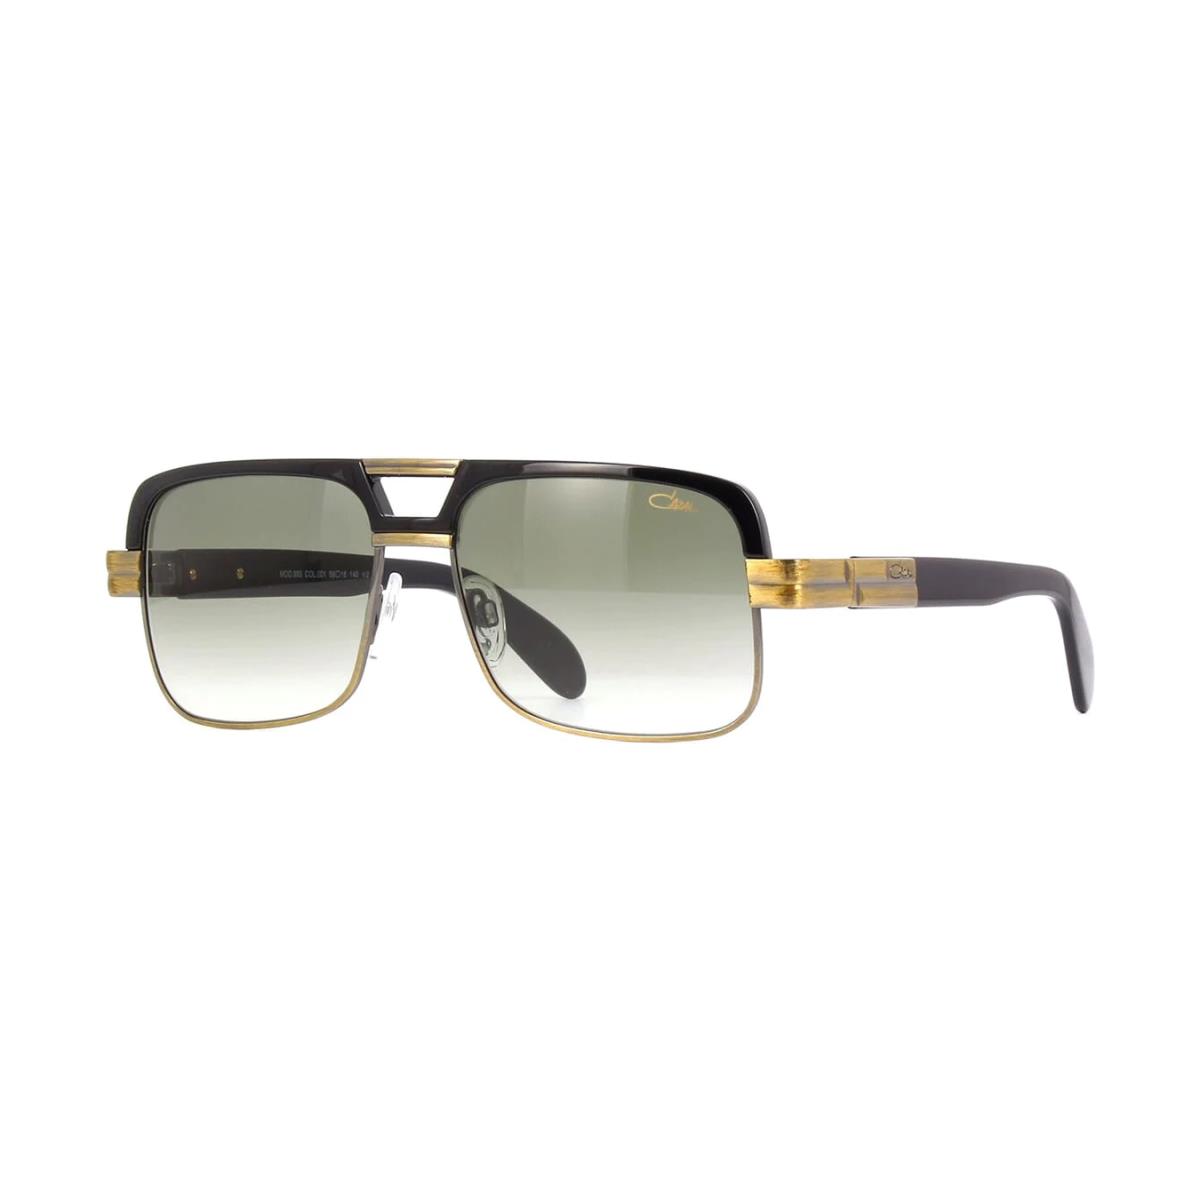 Cazal Legends Sunglasses 993 001 Black Gold Frames Green Lens 58MM